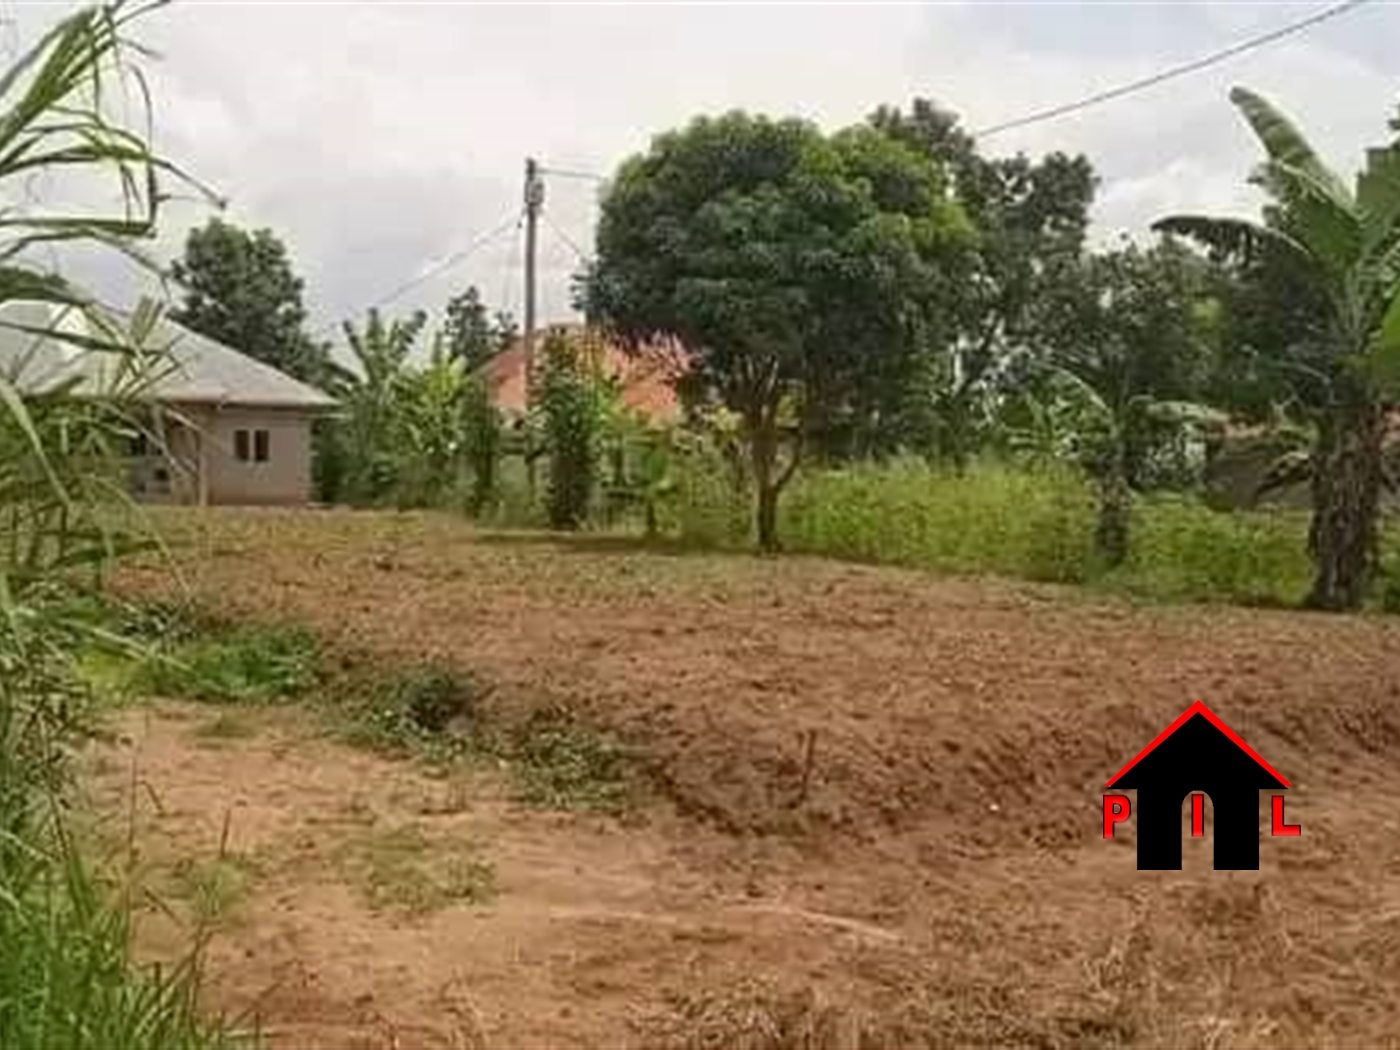 Commercial Land for sale in Buwaya Wakiso